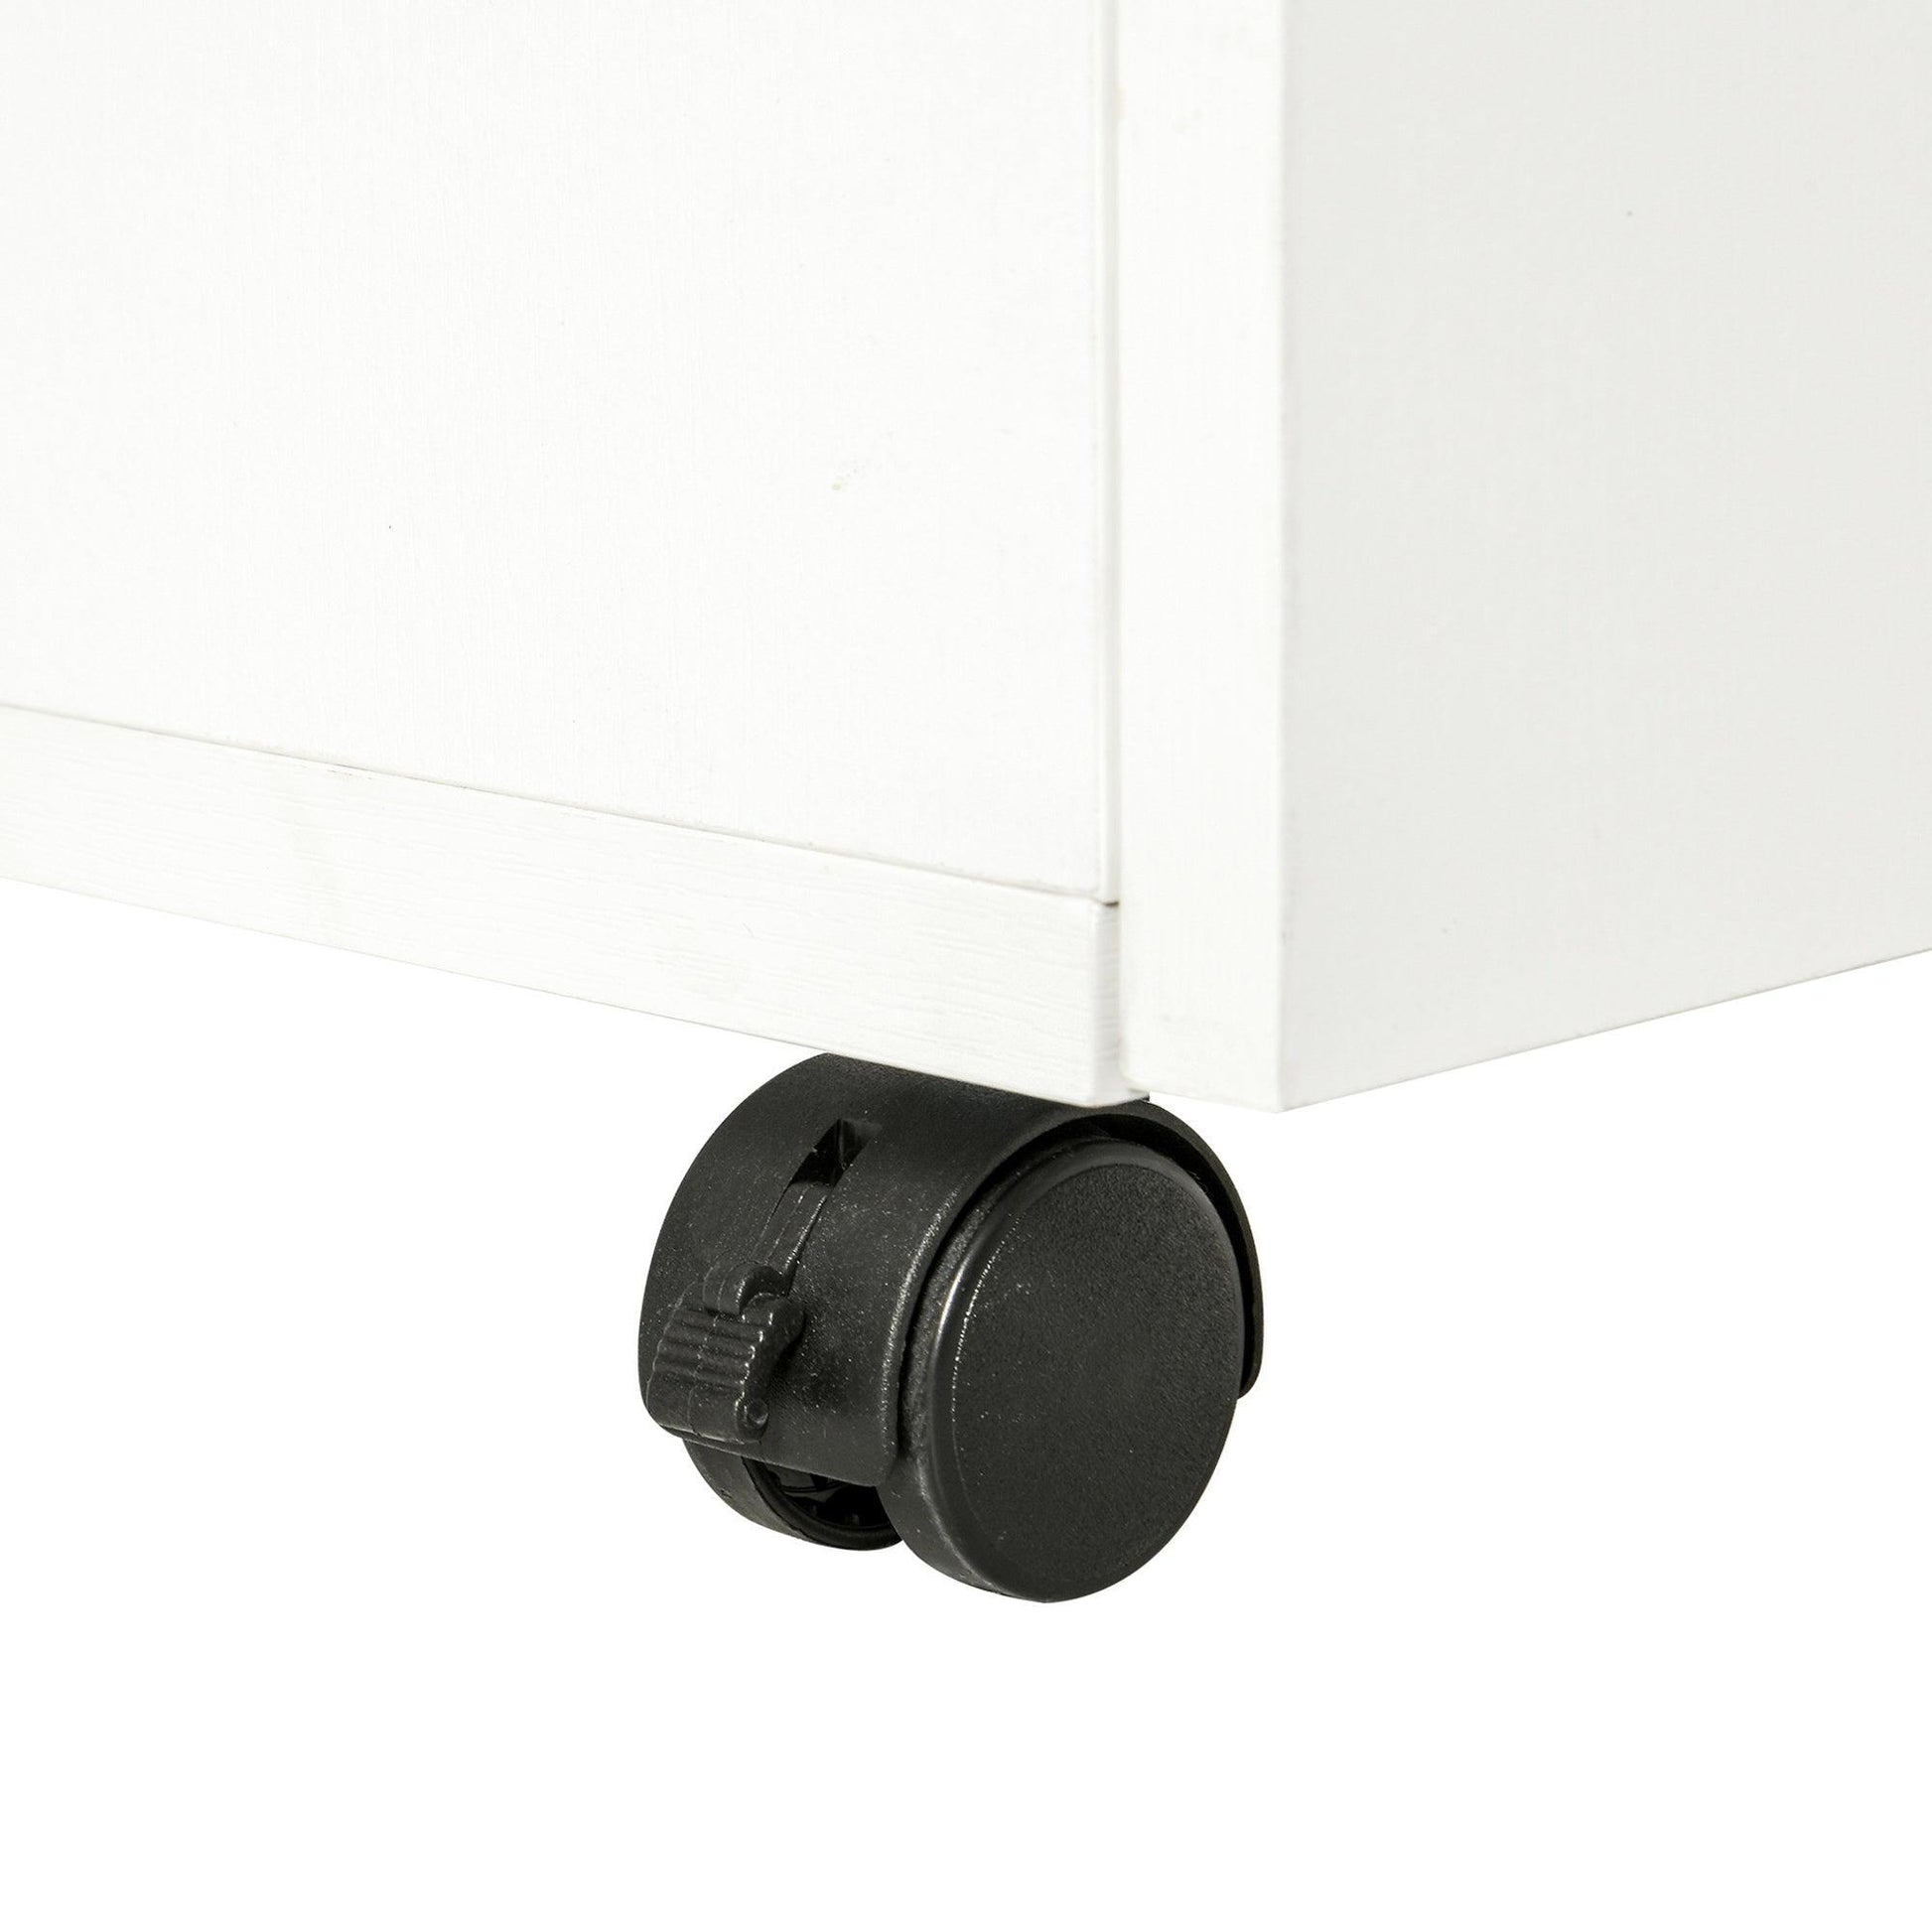 HOMCOM Mobile Storage Cabinet Sideboard with Drawers - White - ALL4U RETAILER LTD